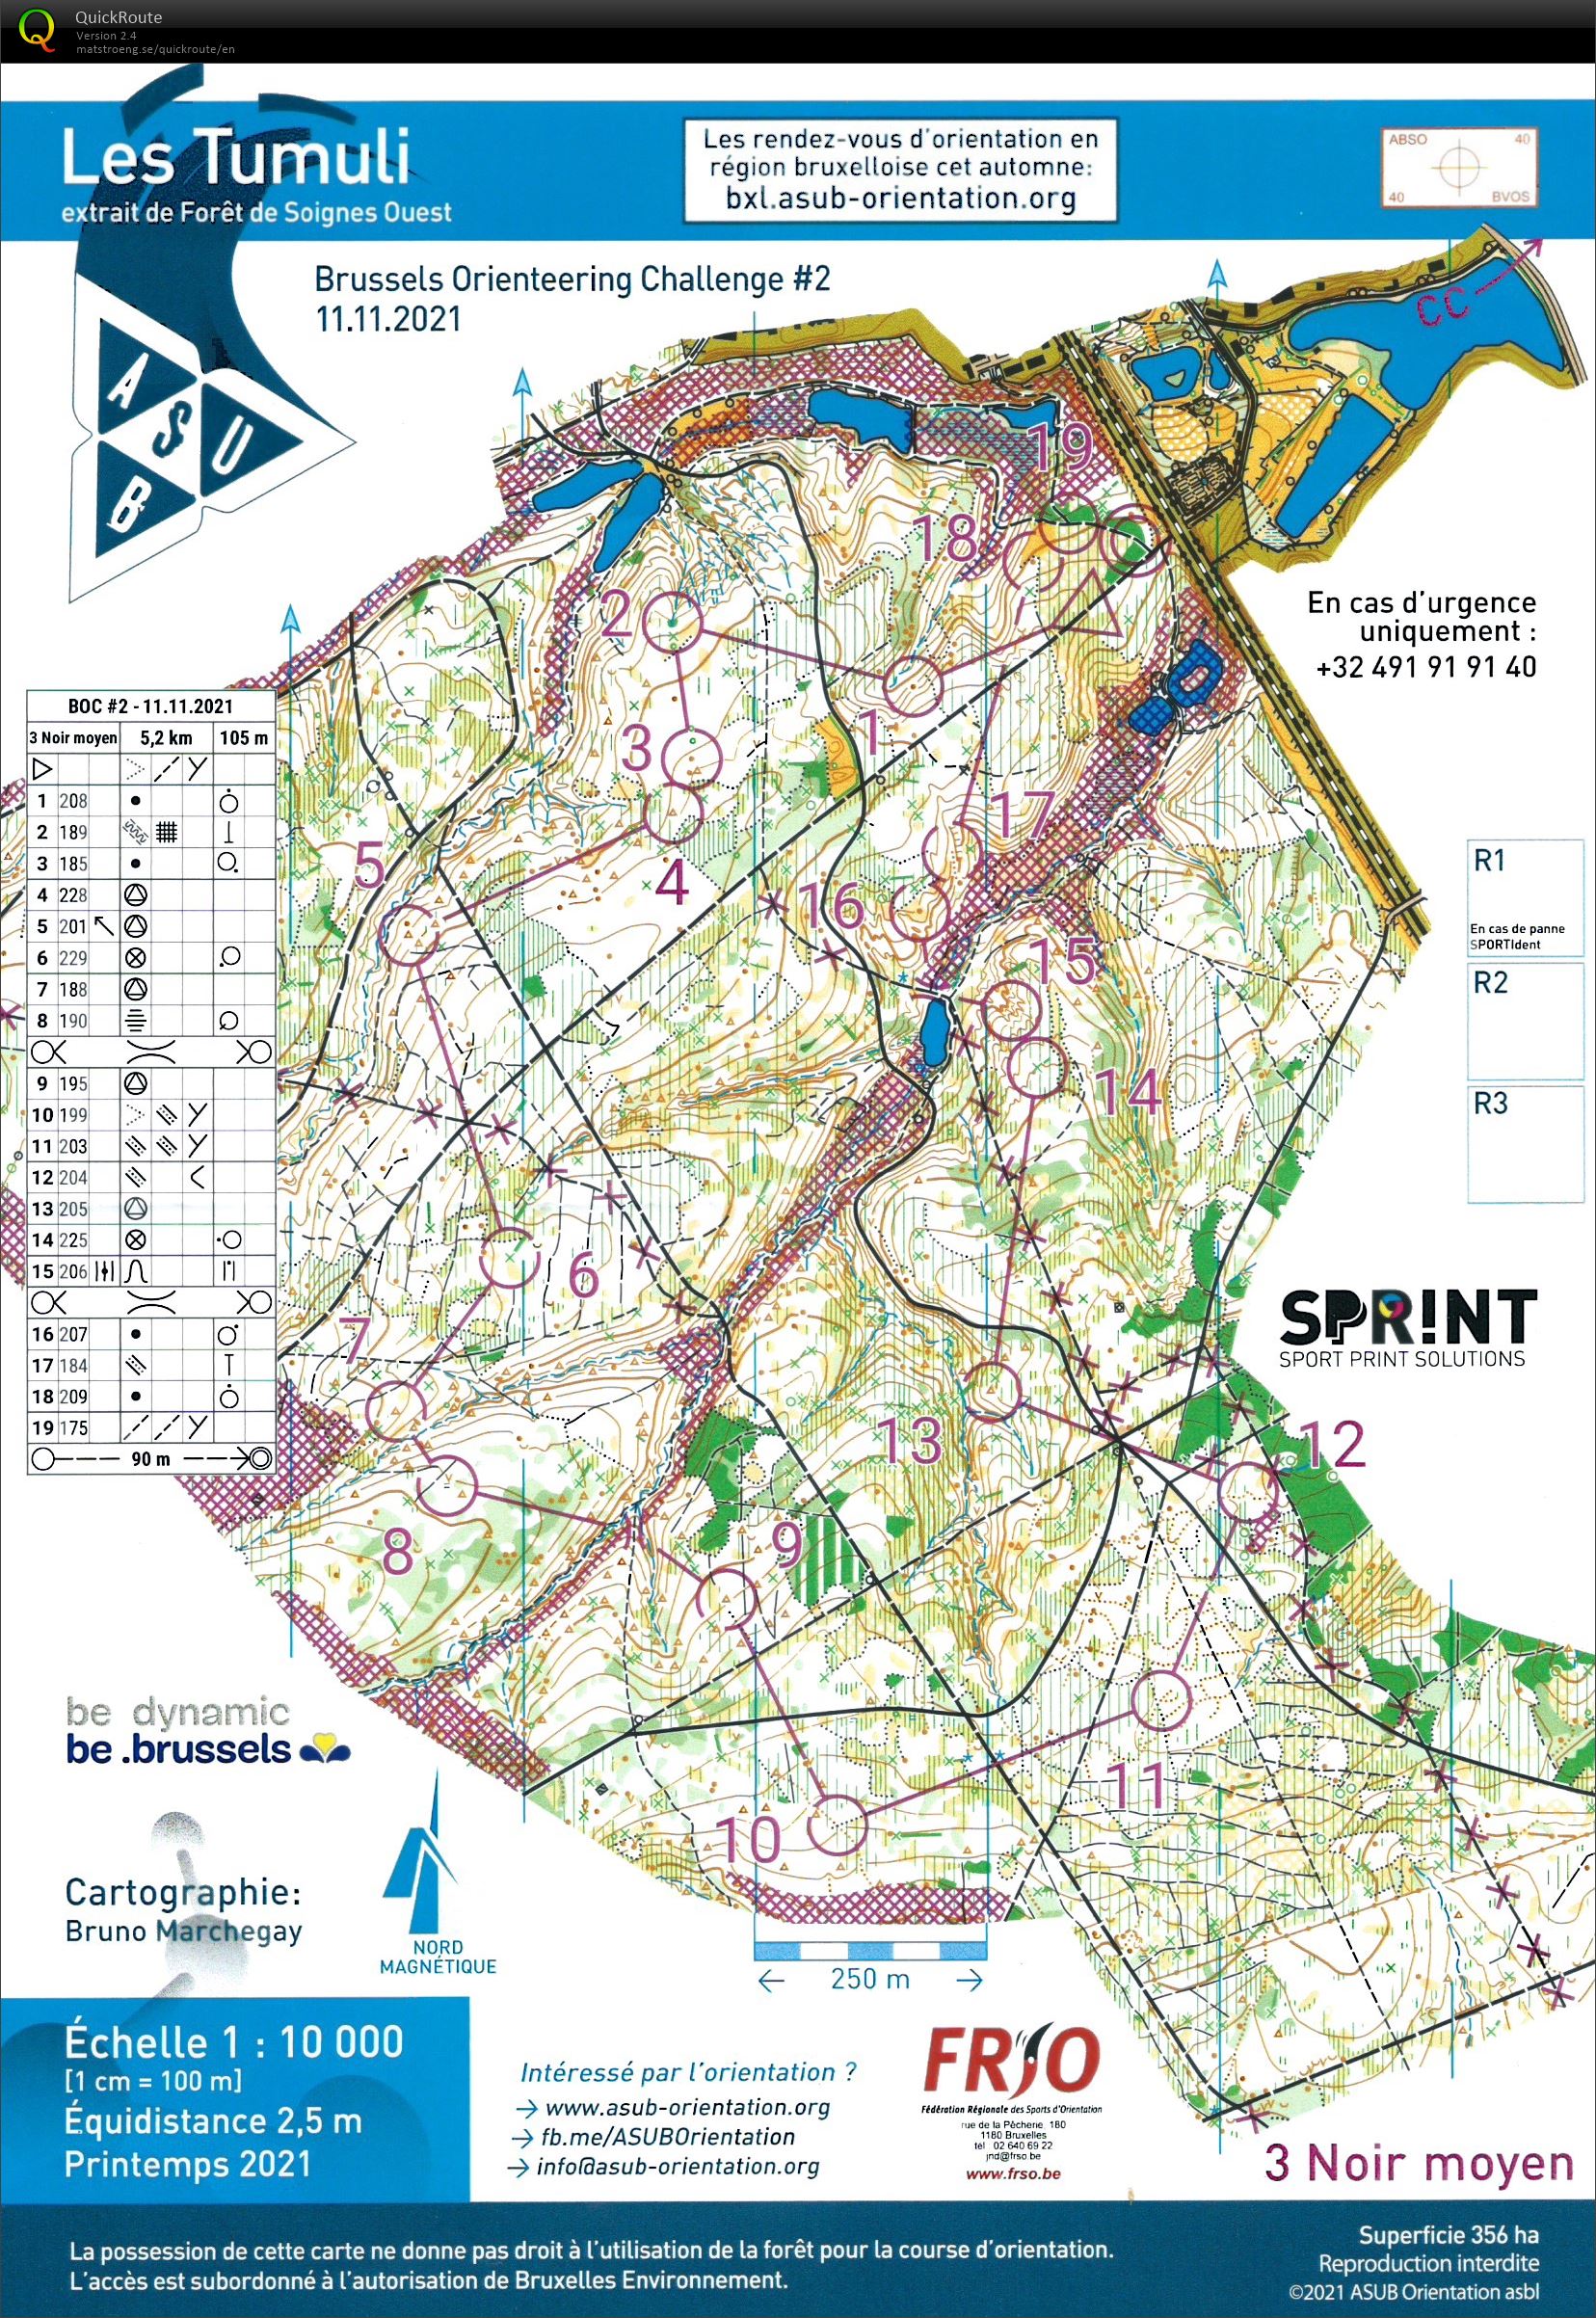 Brussels Orienteering Challenge - Watermael-Boitsfort (11.11.2021)